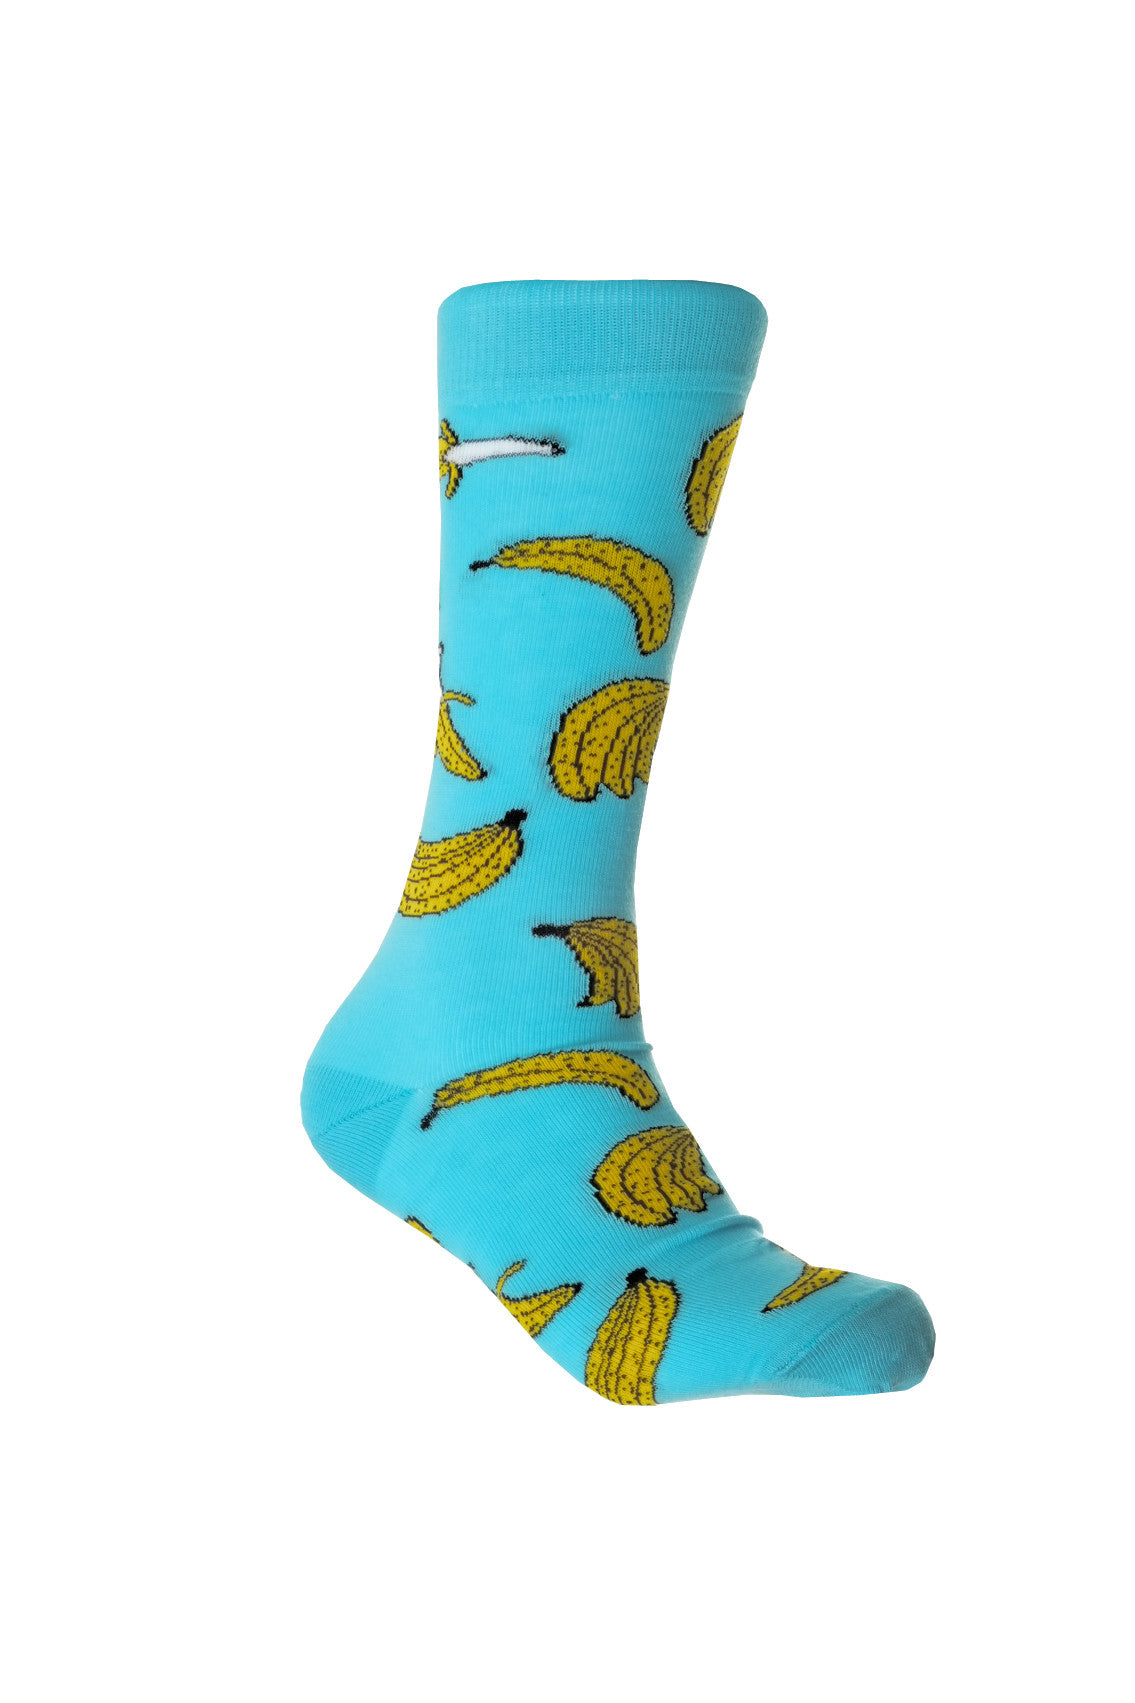 Giraffe Cool | Blue Yellow Bananas Brushed Cotton Socks Foot Front